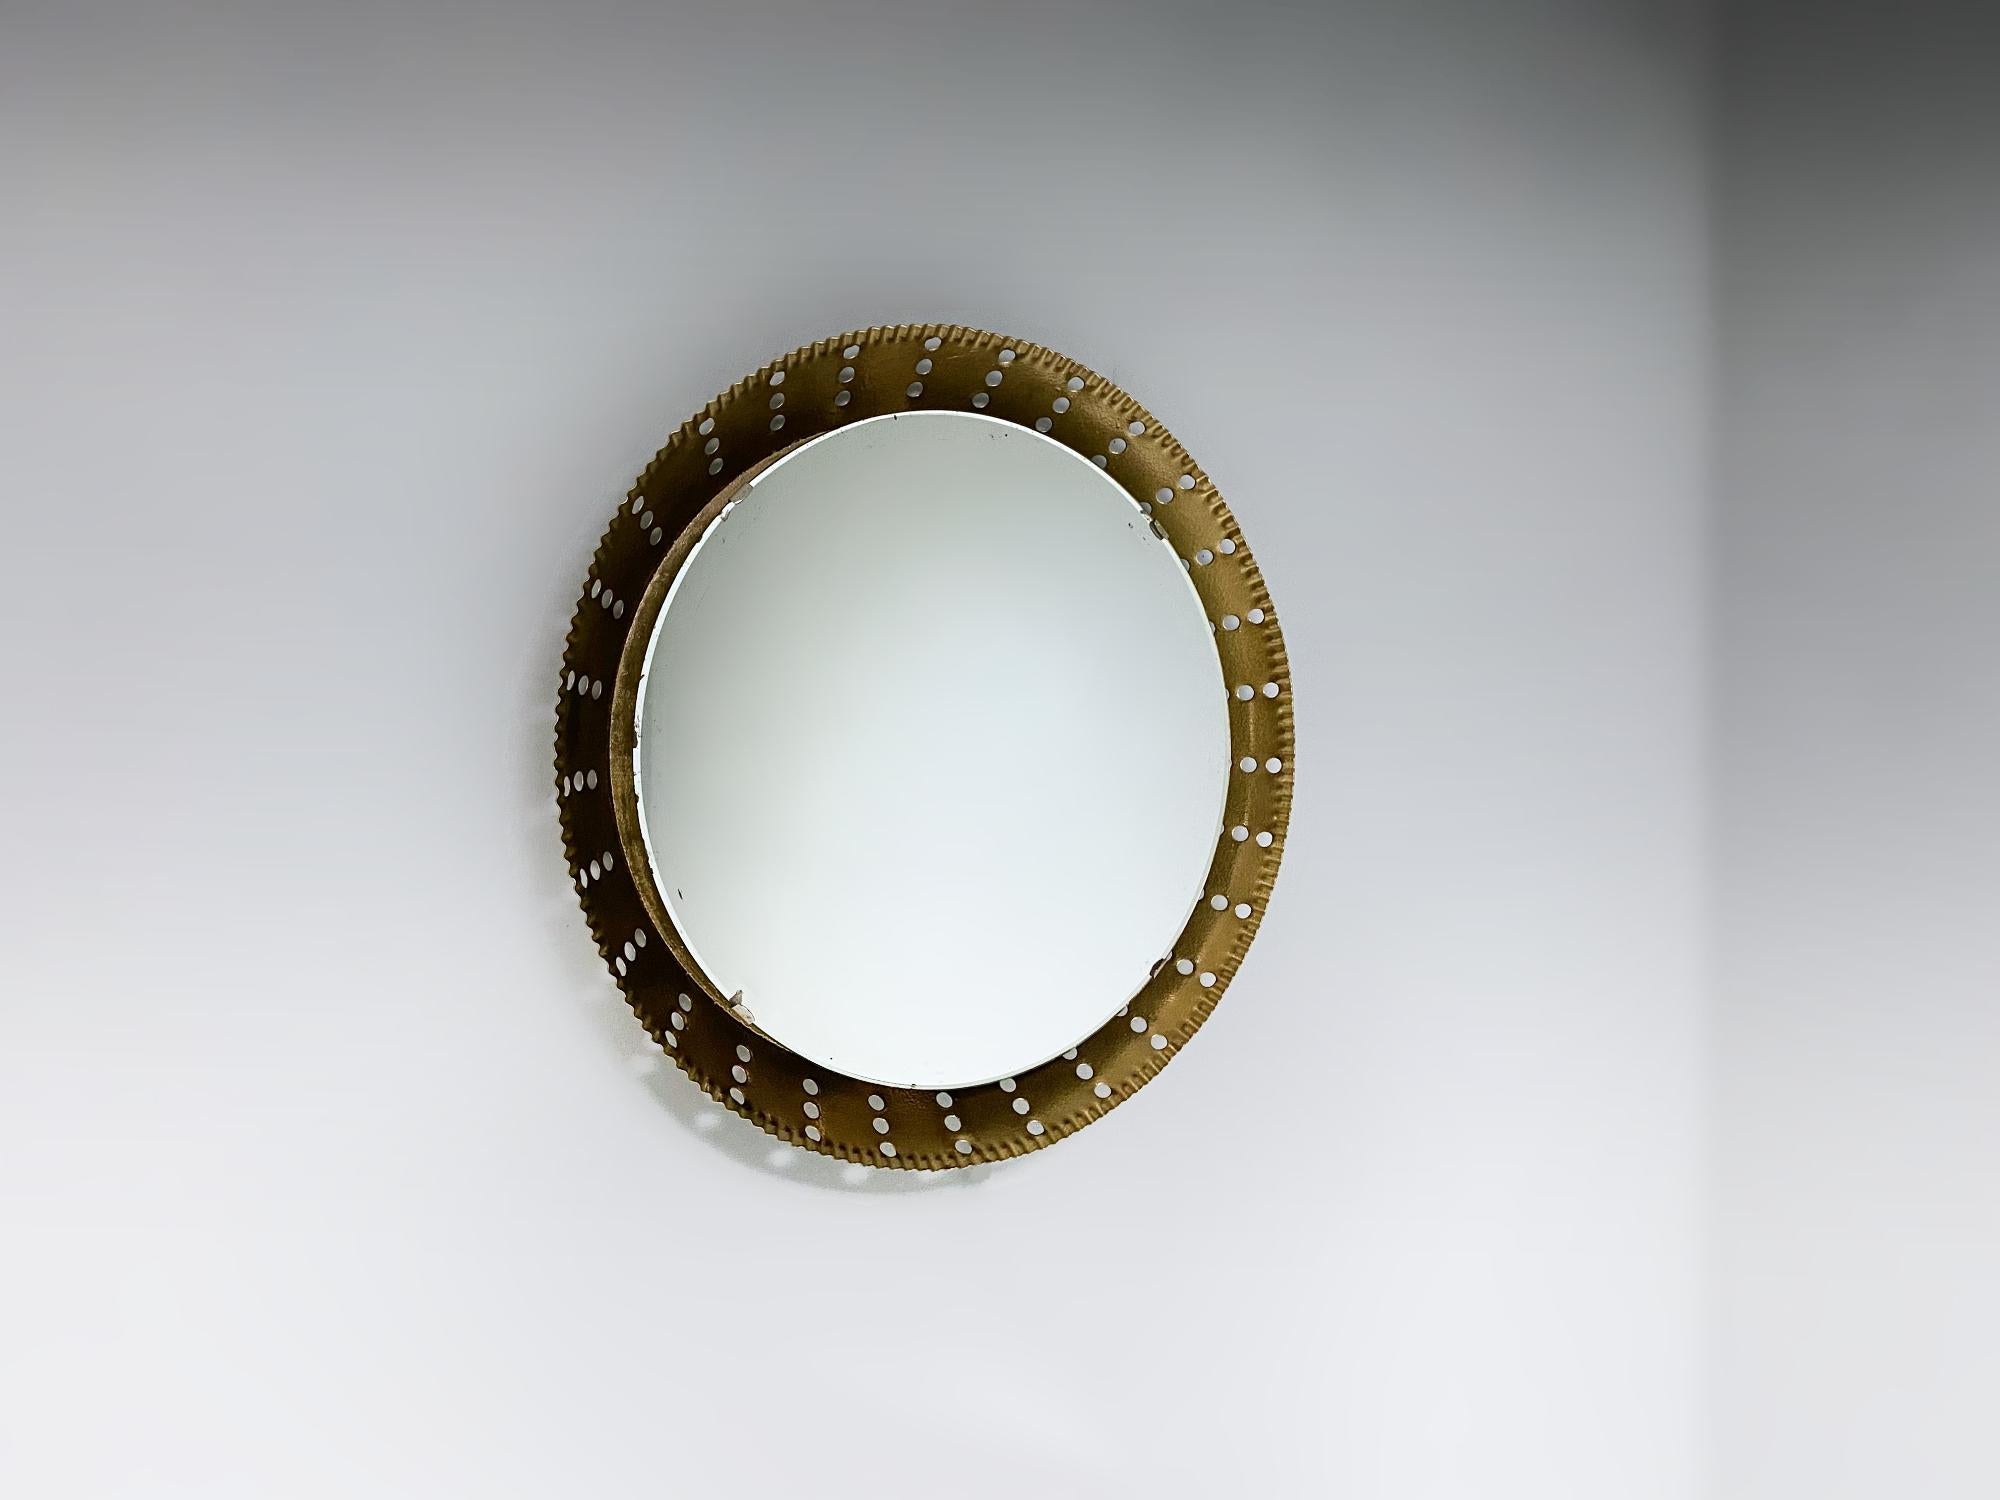 French Artisanal Illuminated Golden Sunburst Wall Mirror, 1960s, France For Sale 4